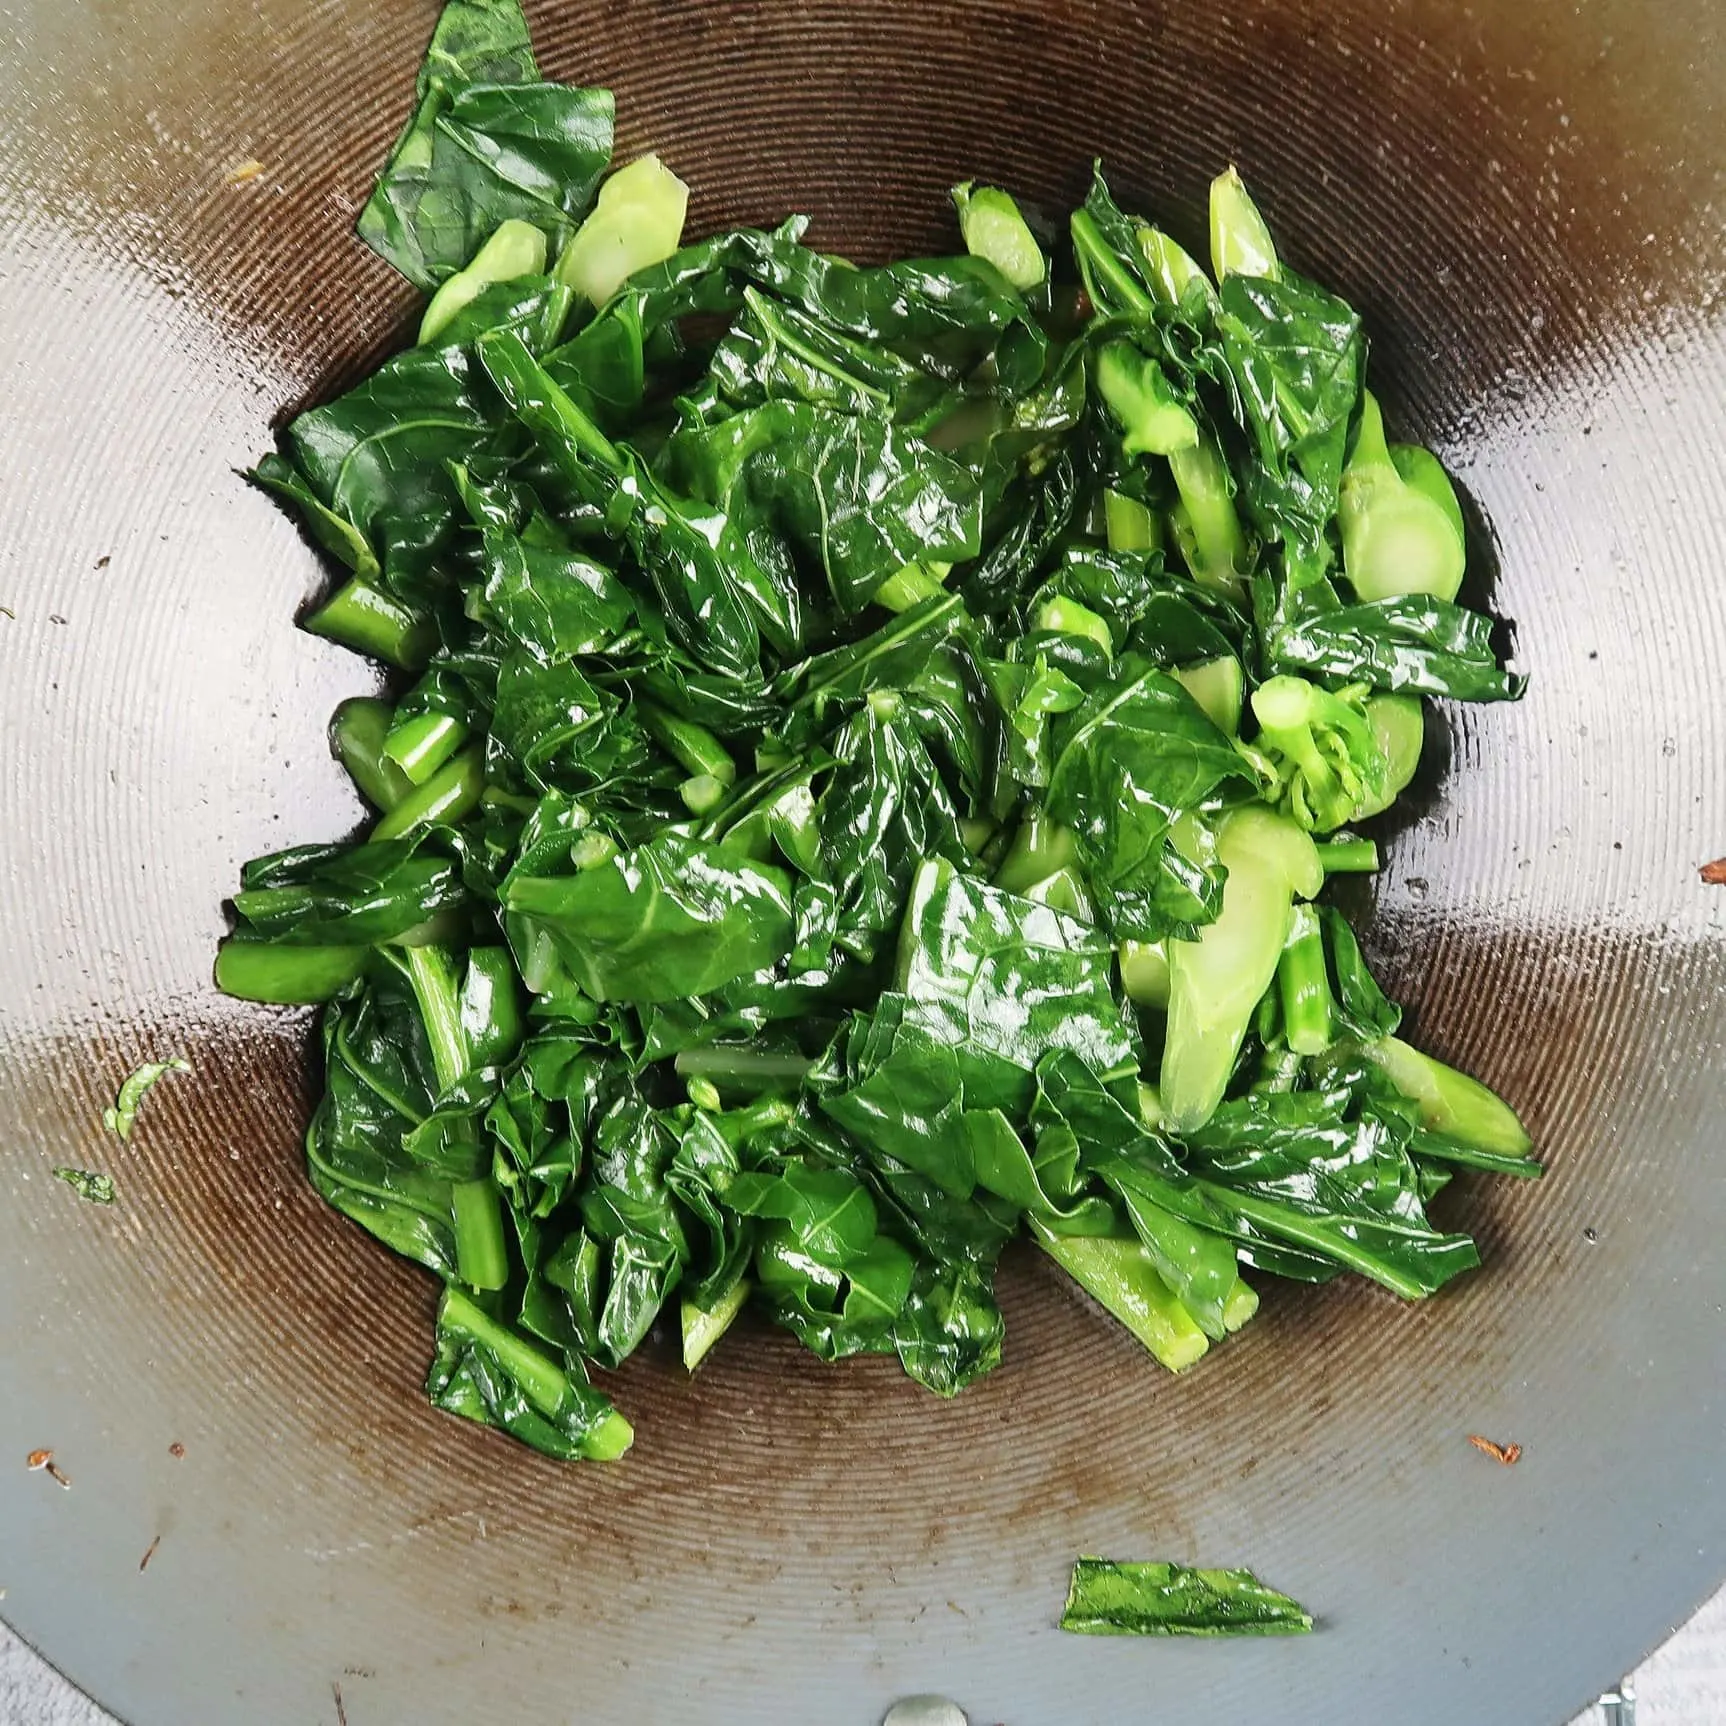 Sauteed sliced gai lan (Chinese broccoli) in the wok.